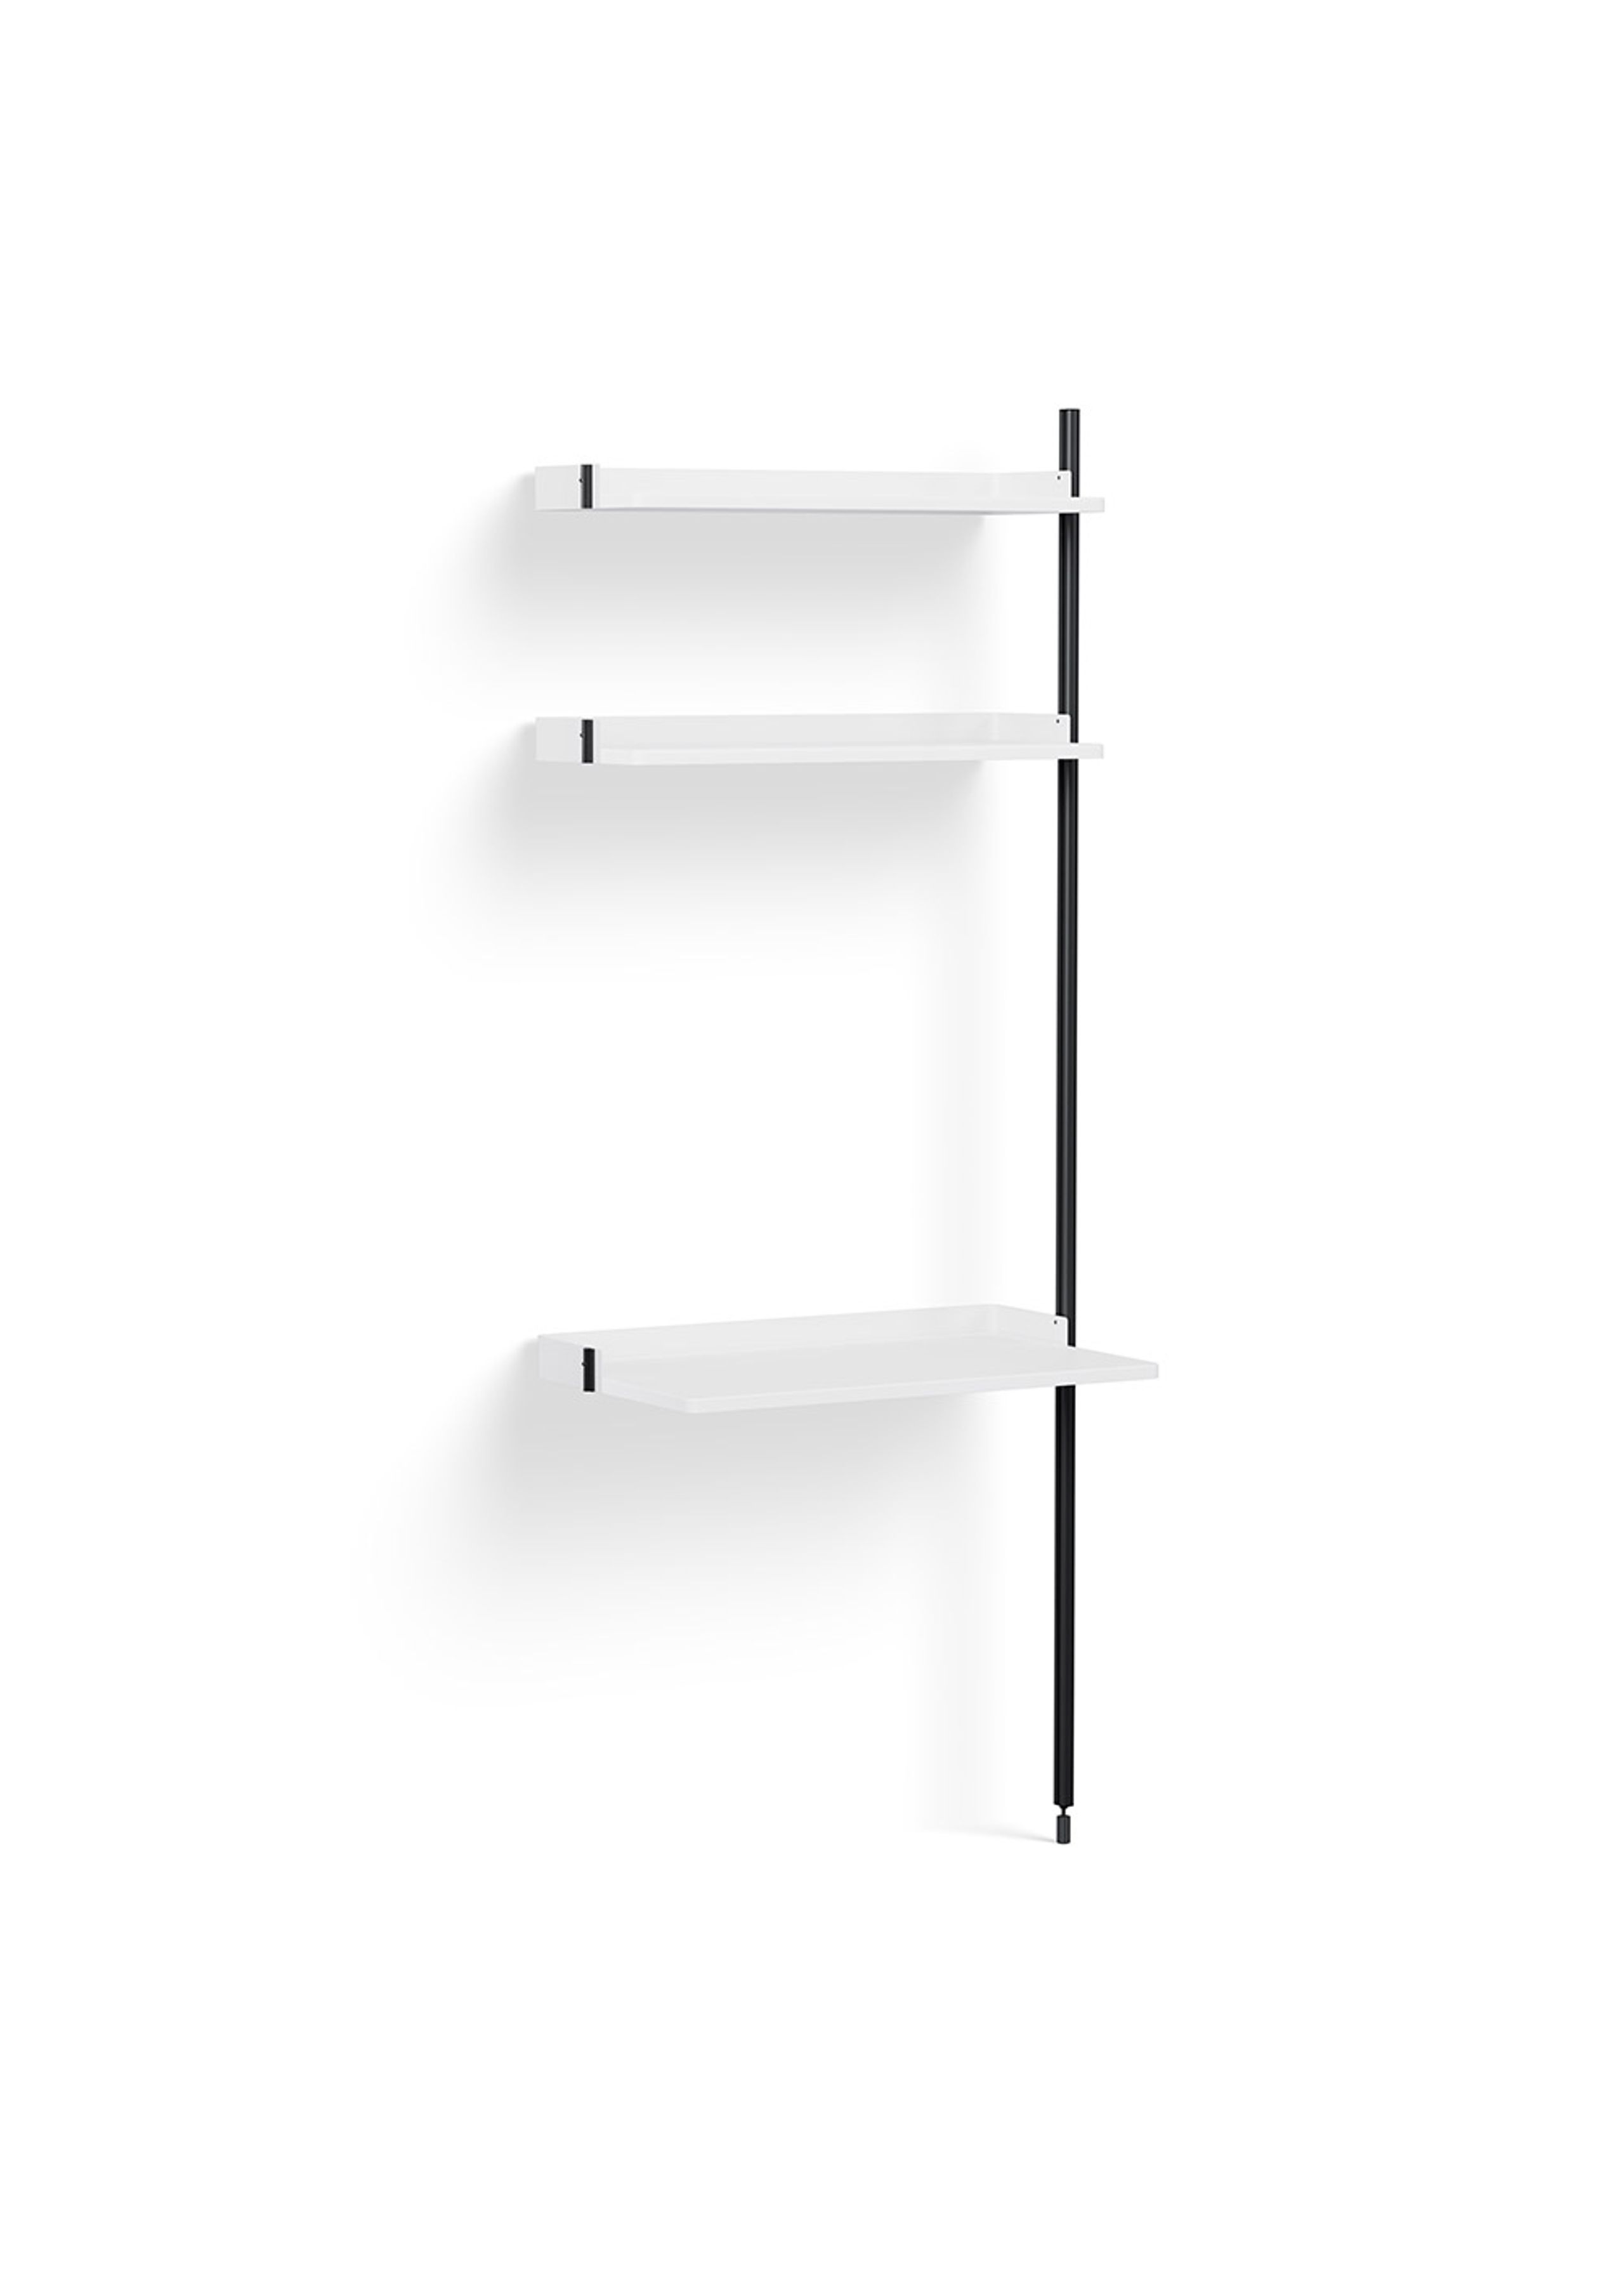 HAY - Reol - Pier System / No. 10 - White / Black Anodised Aluminium